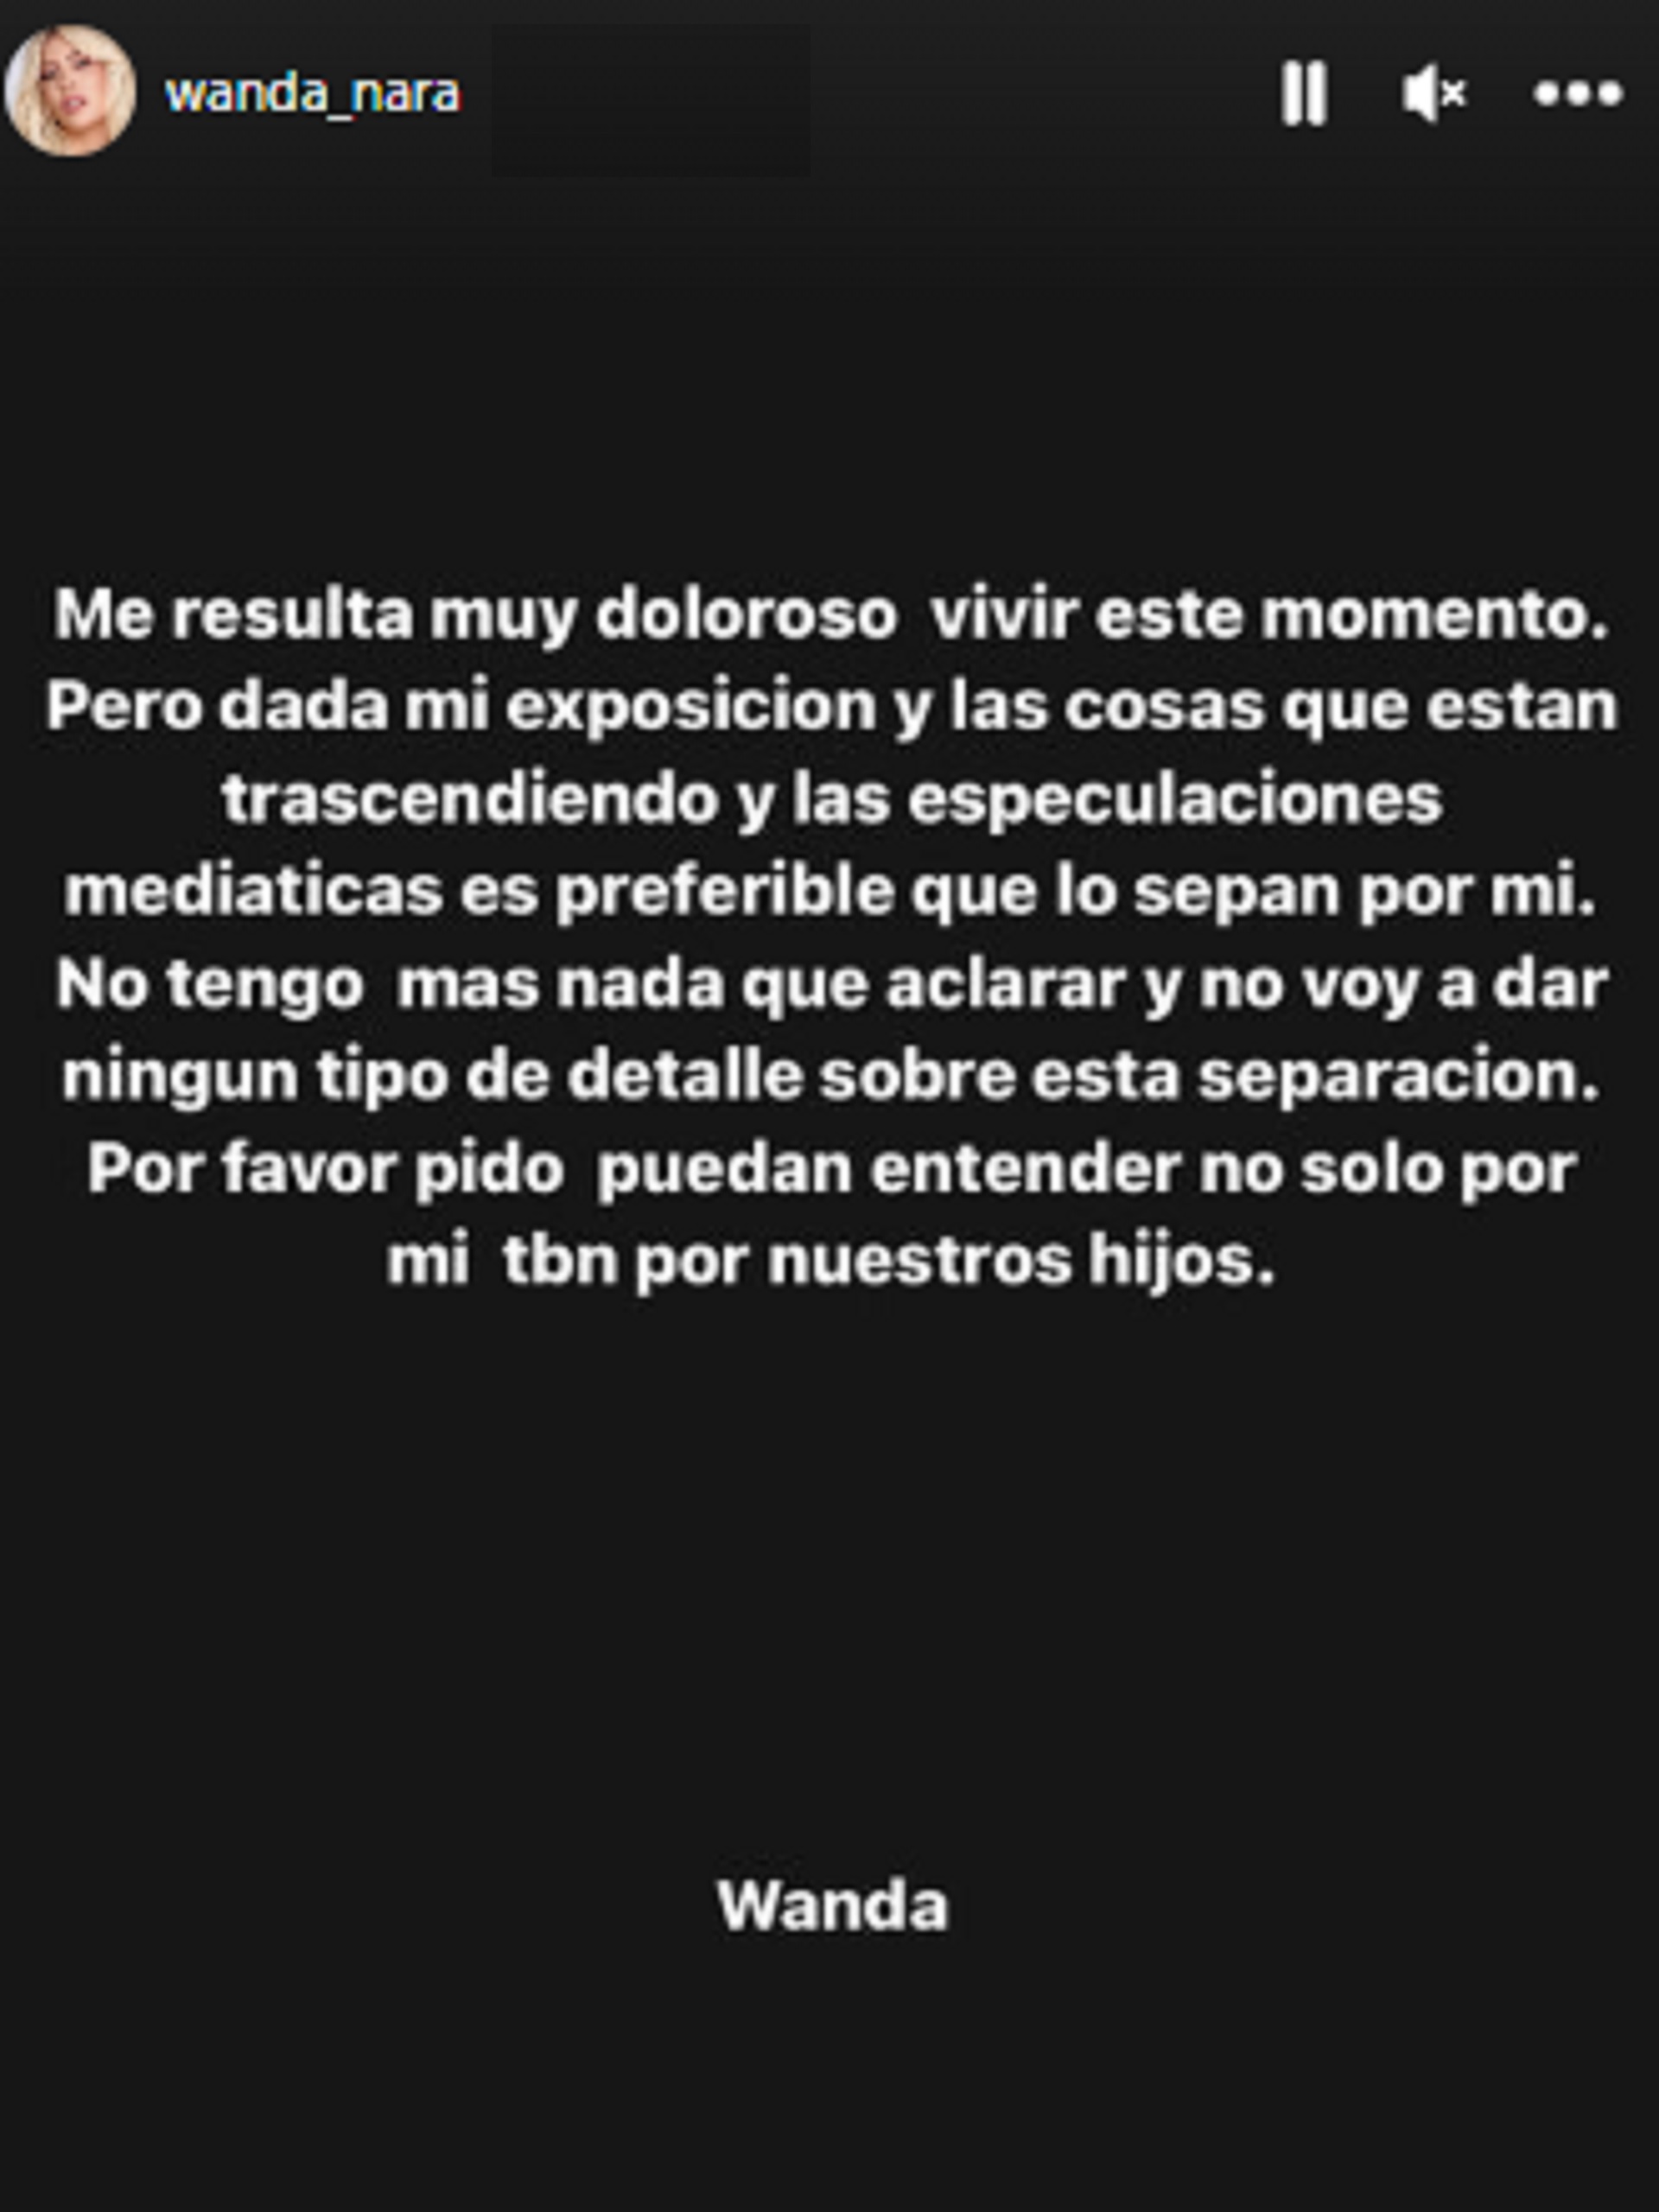 Wanda Nara's statement on their split